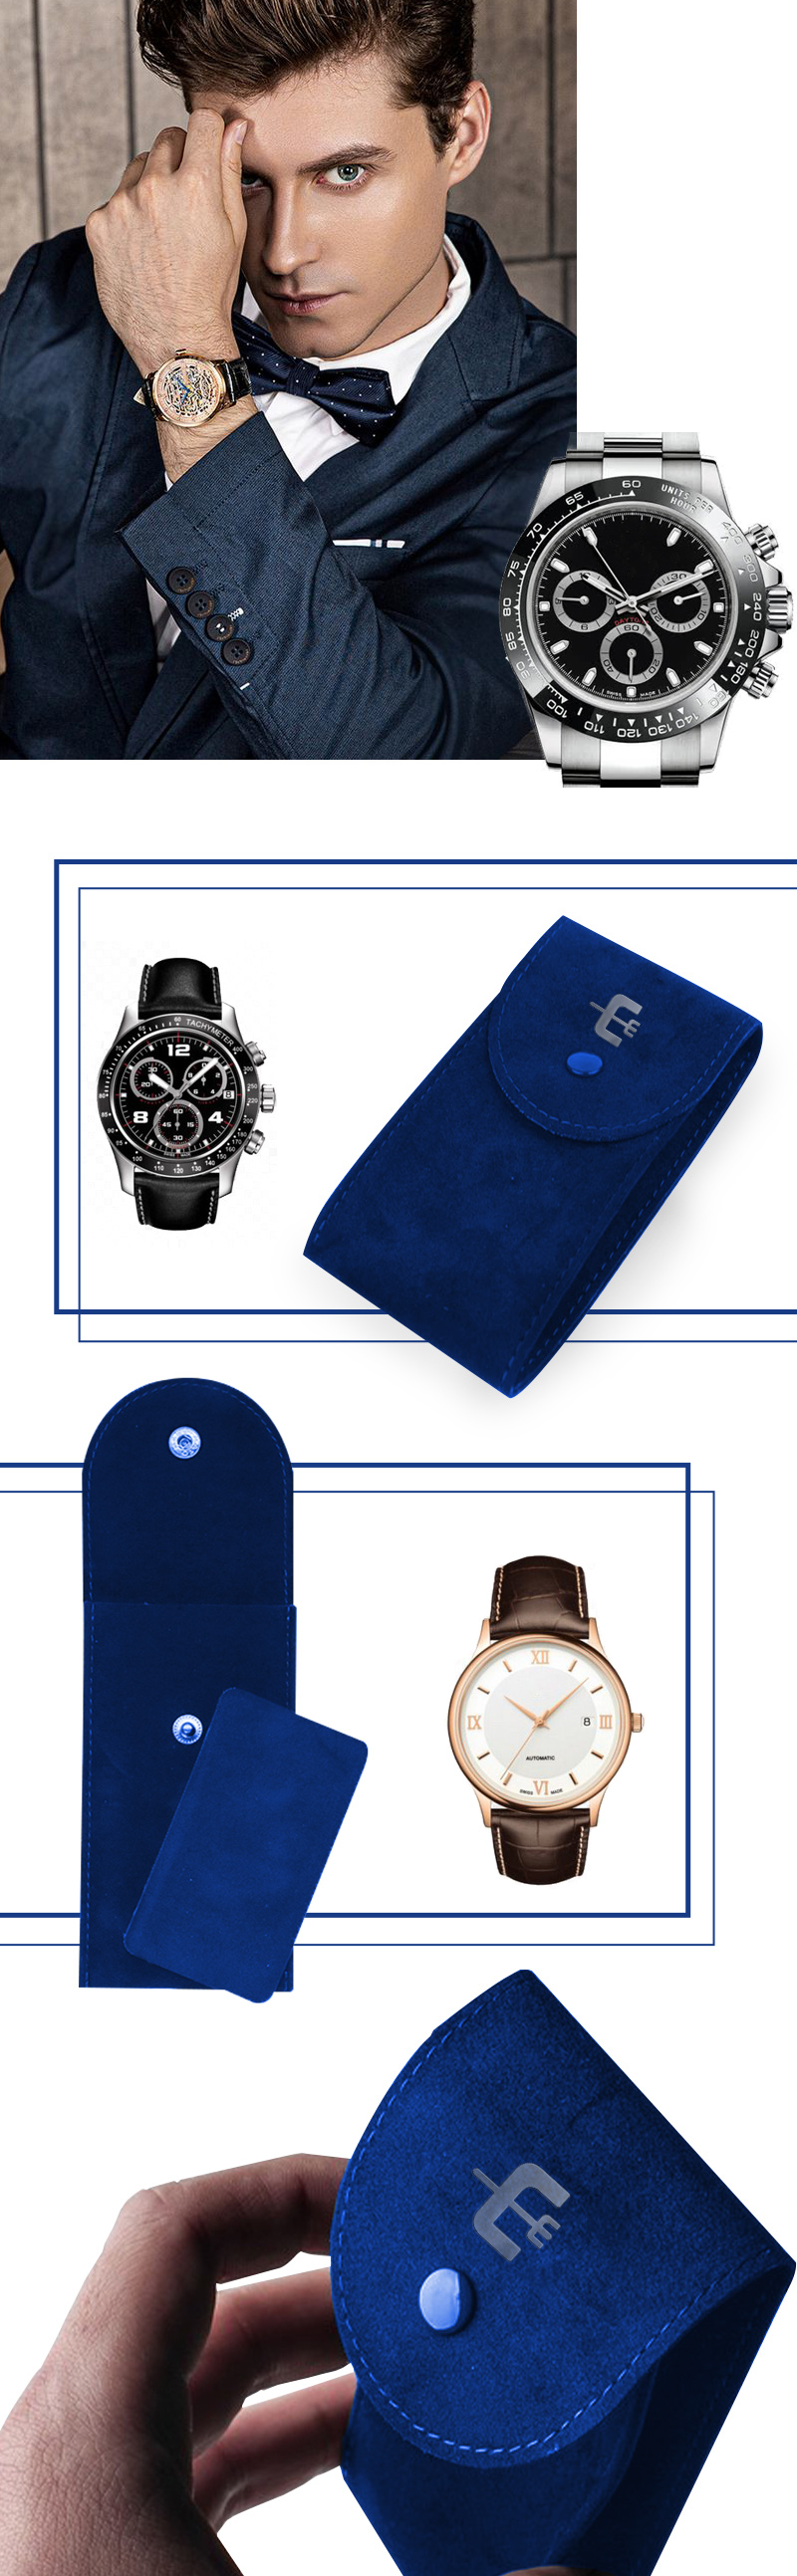 Blue velvet watch pouch